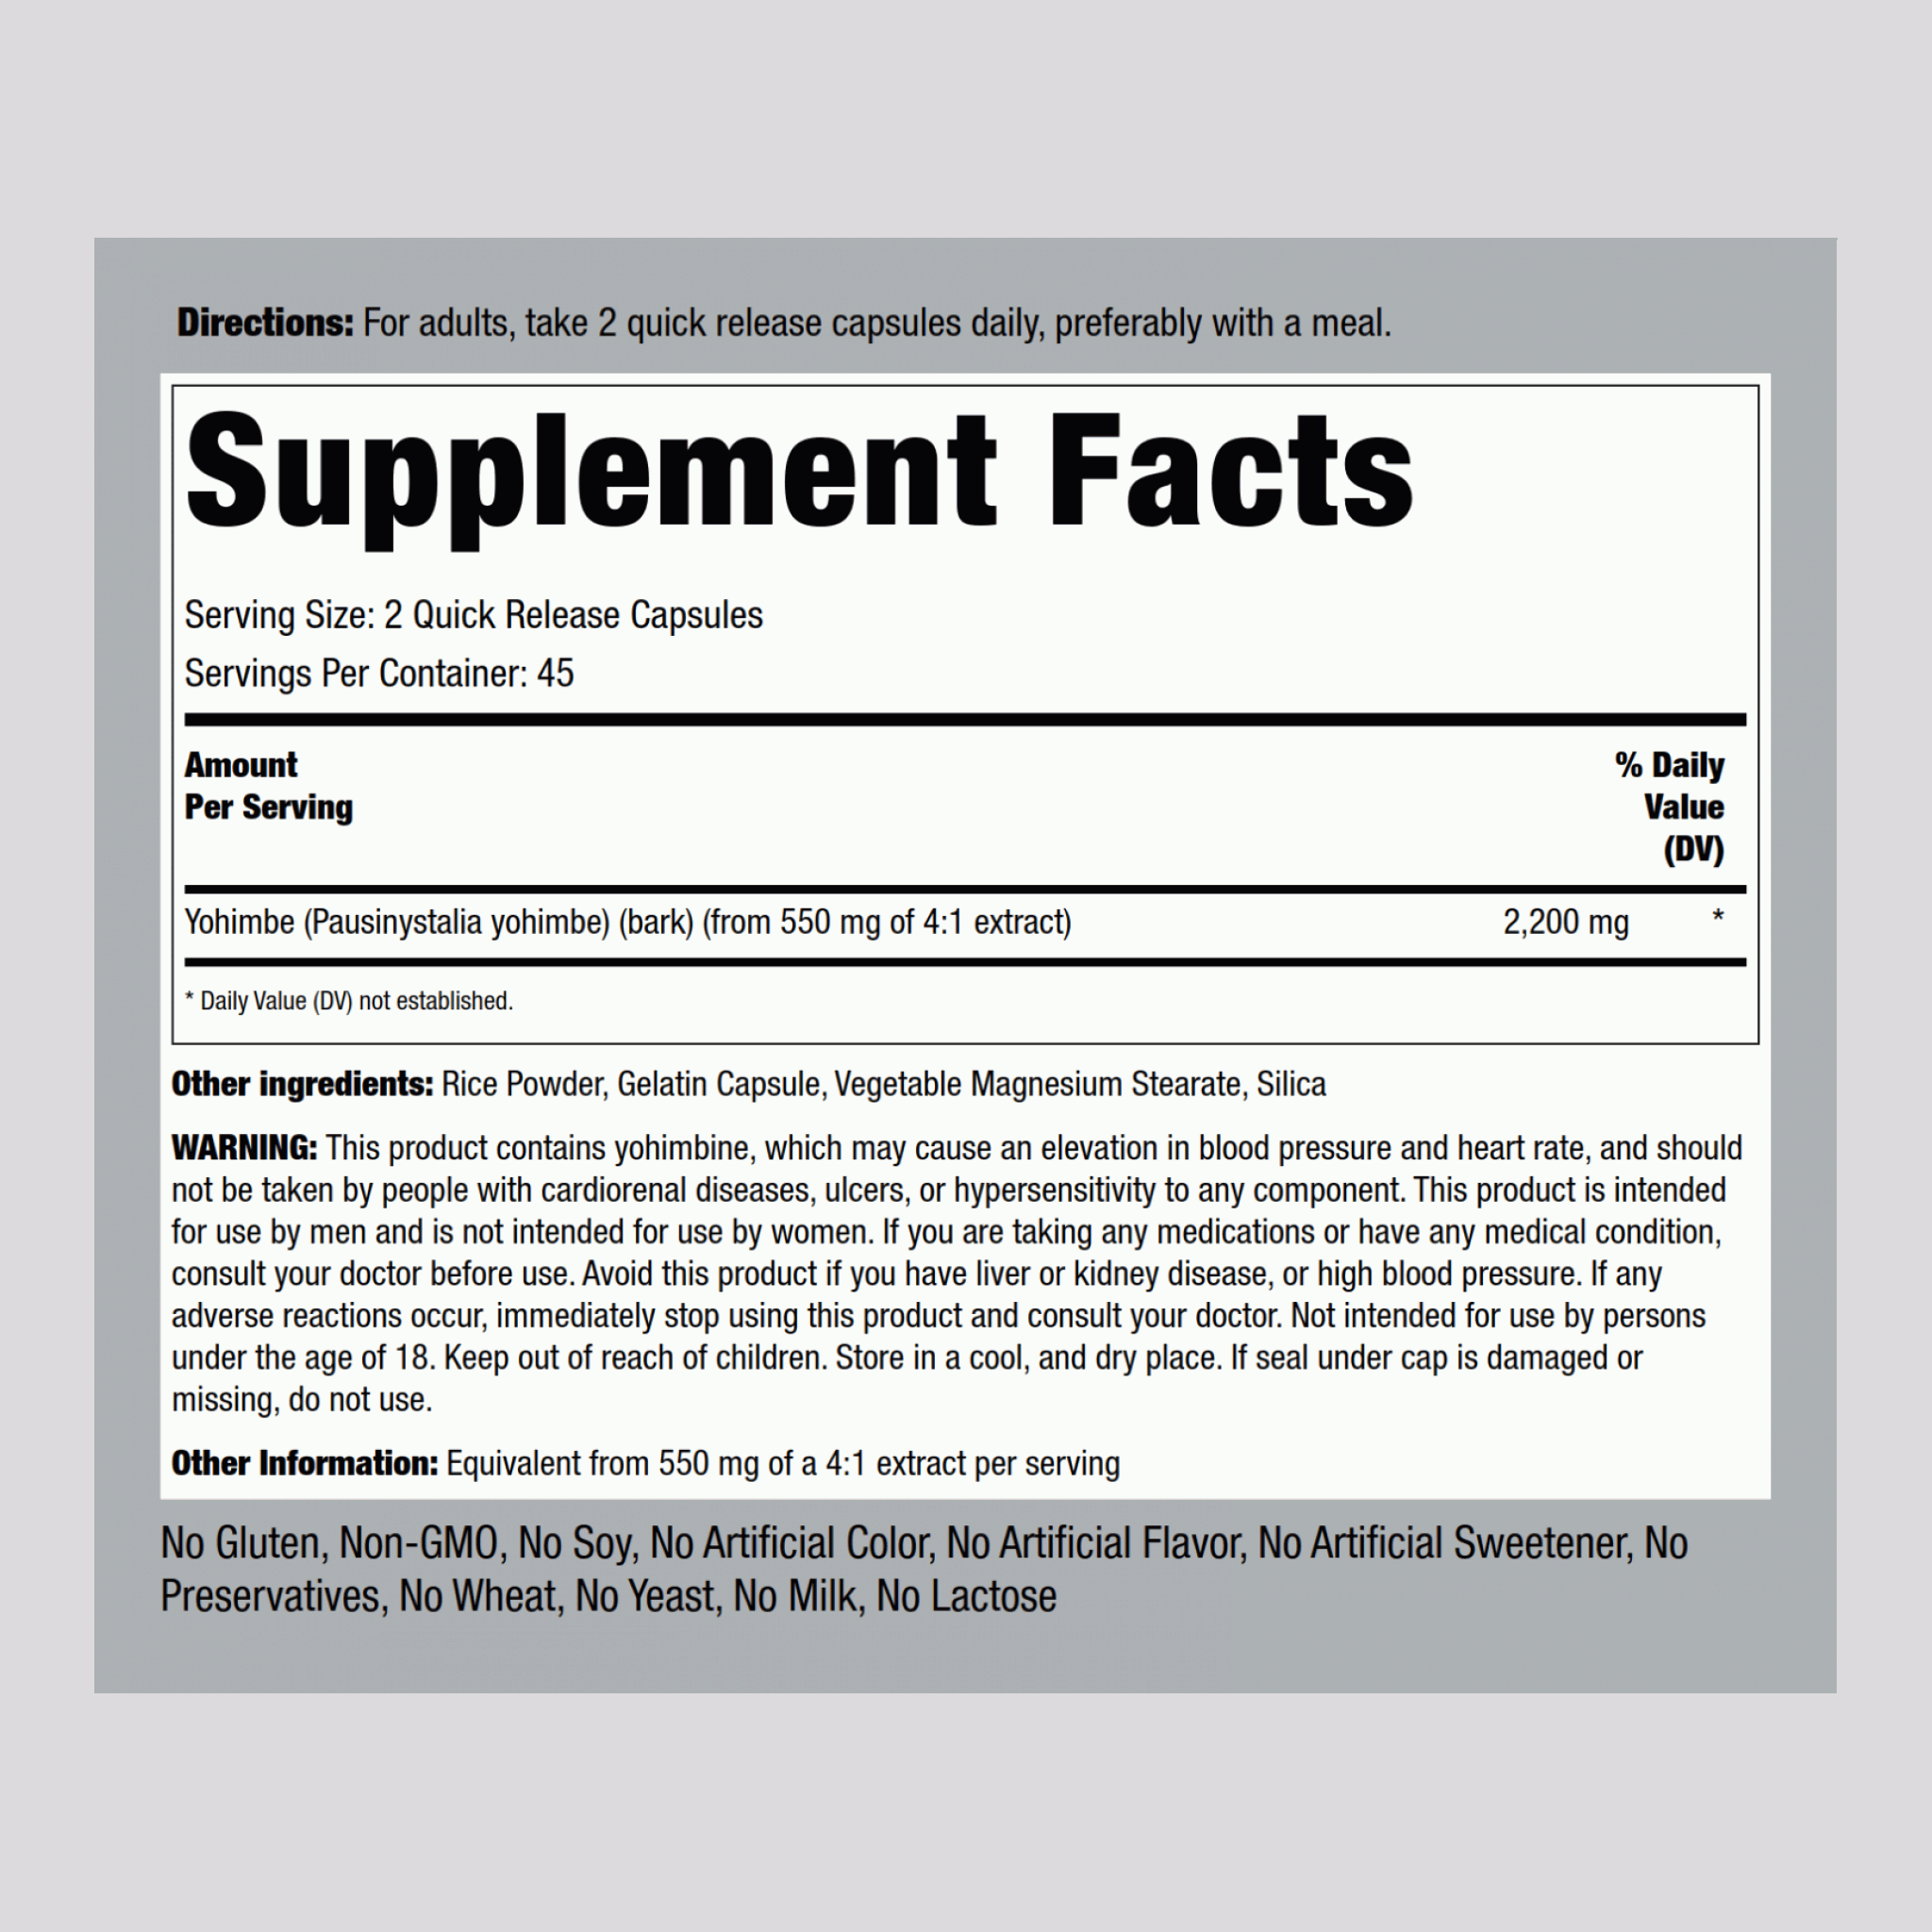 Yohimbe Max, 2200 mg (per serving), 90 Quick Release Capsules